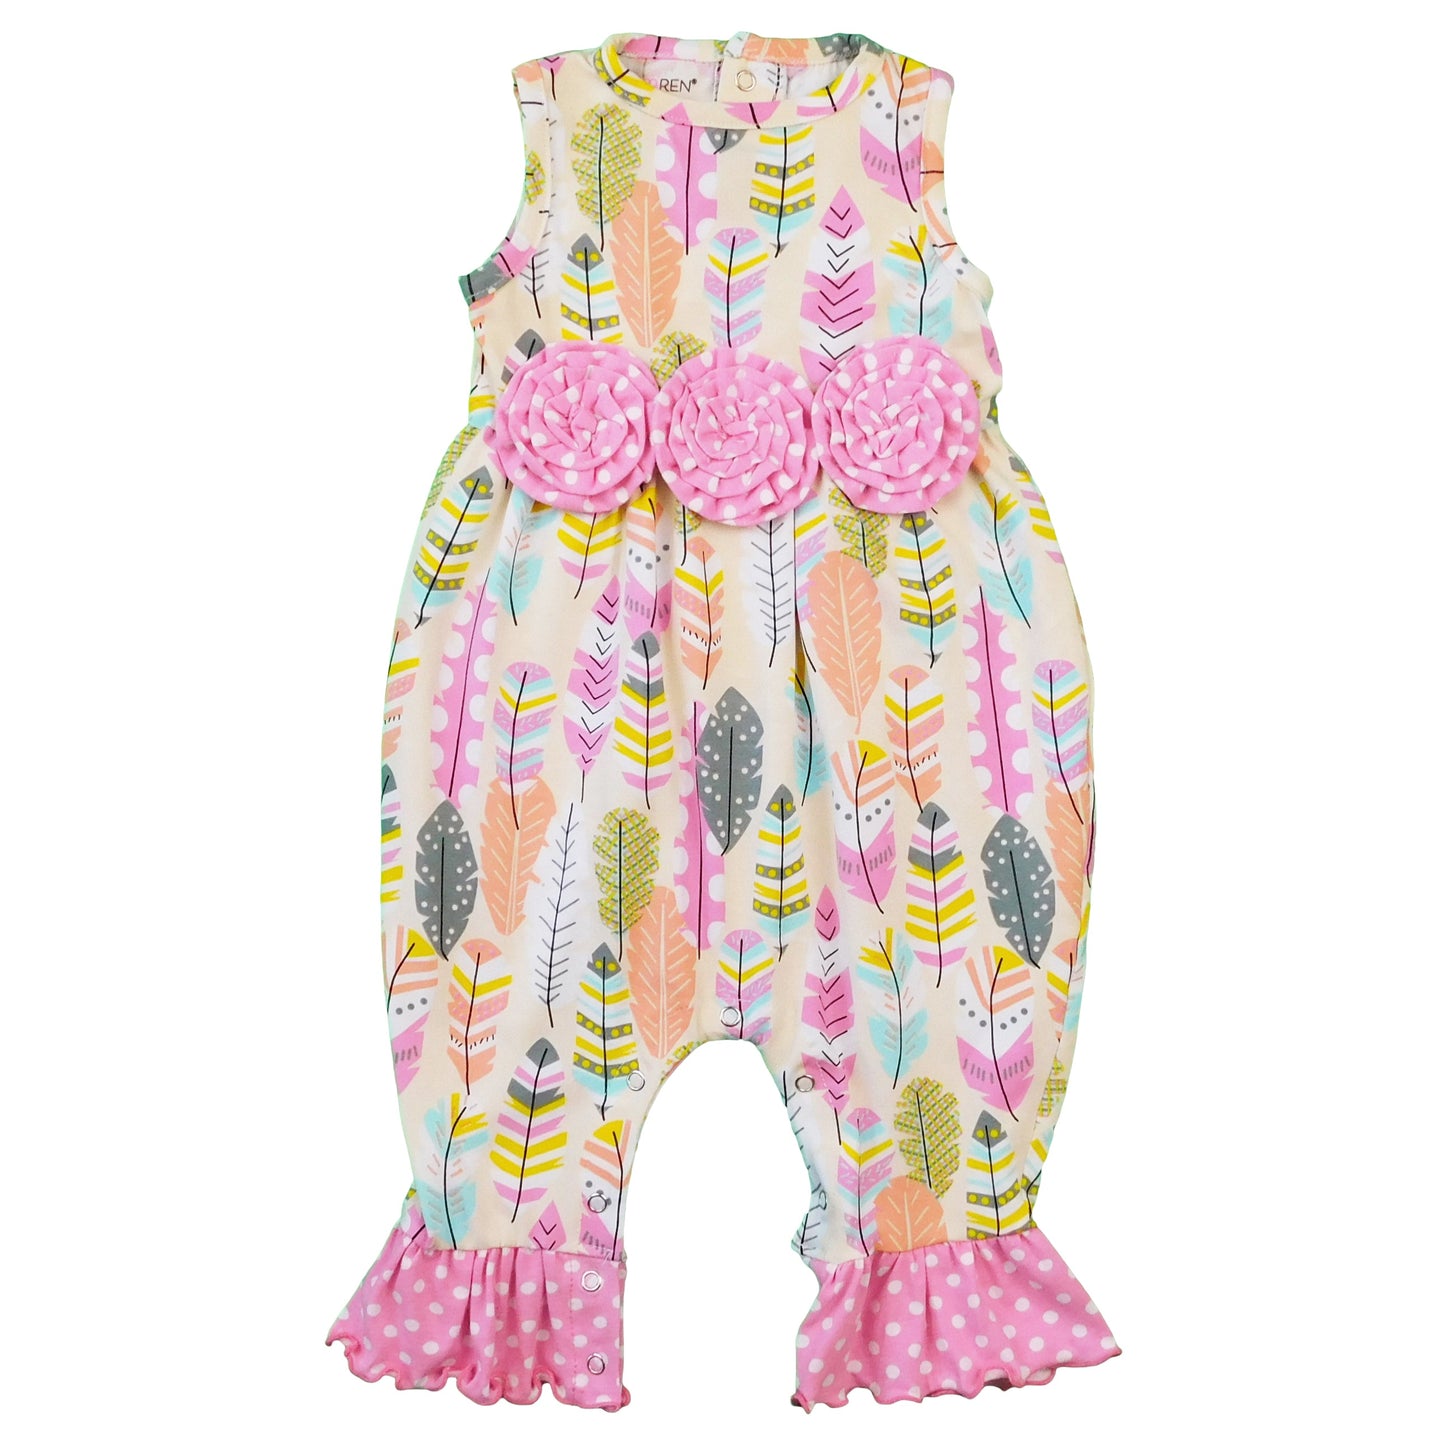 AnnLoren Girls Boutique Feather & Polka Dot Knit Cotton Romper One piece Infant Toddler